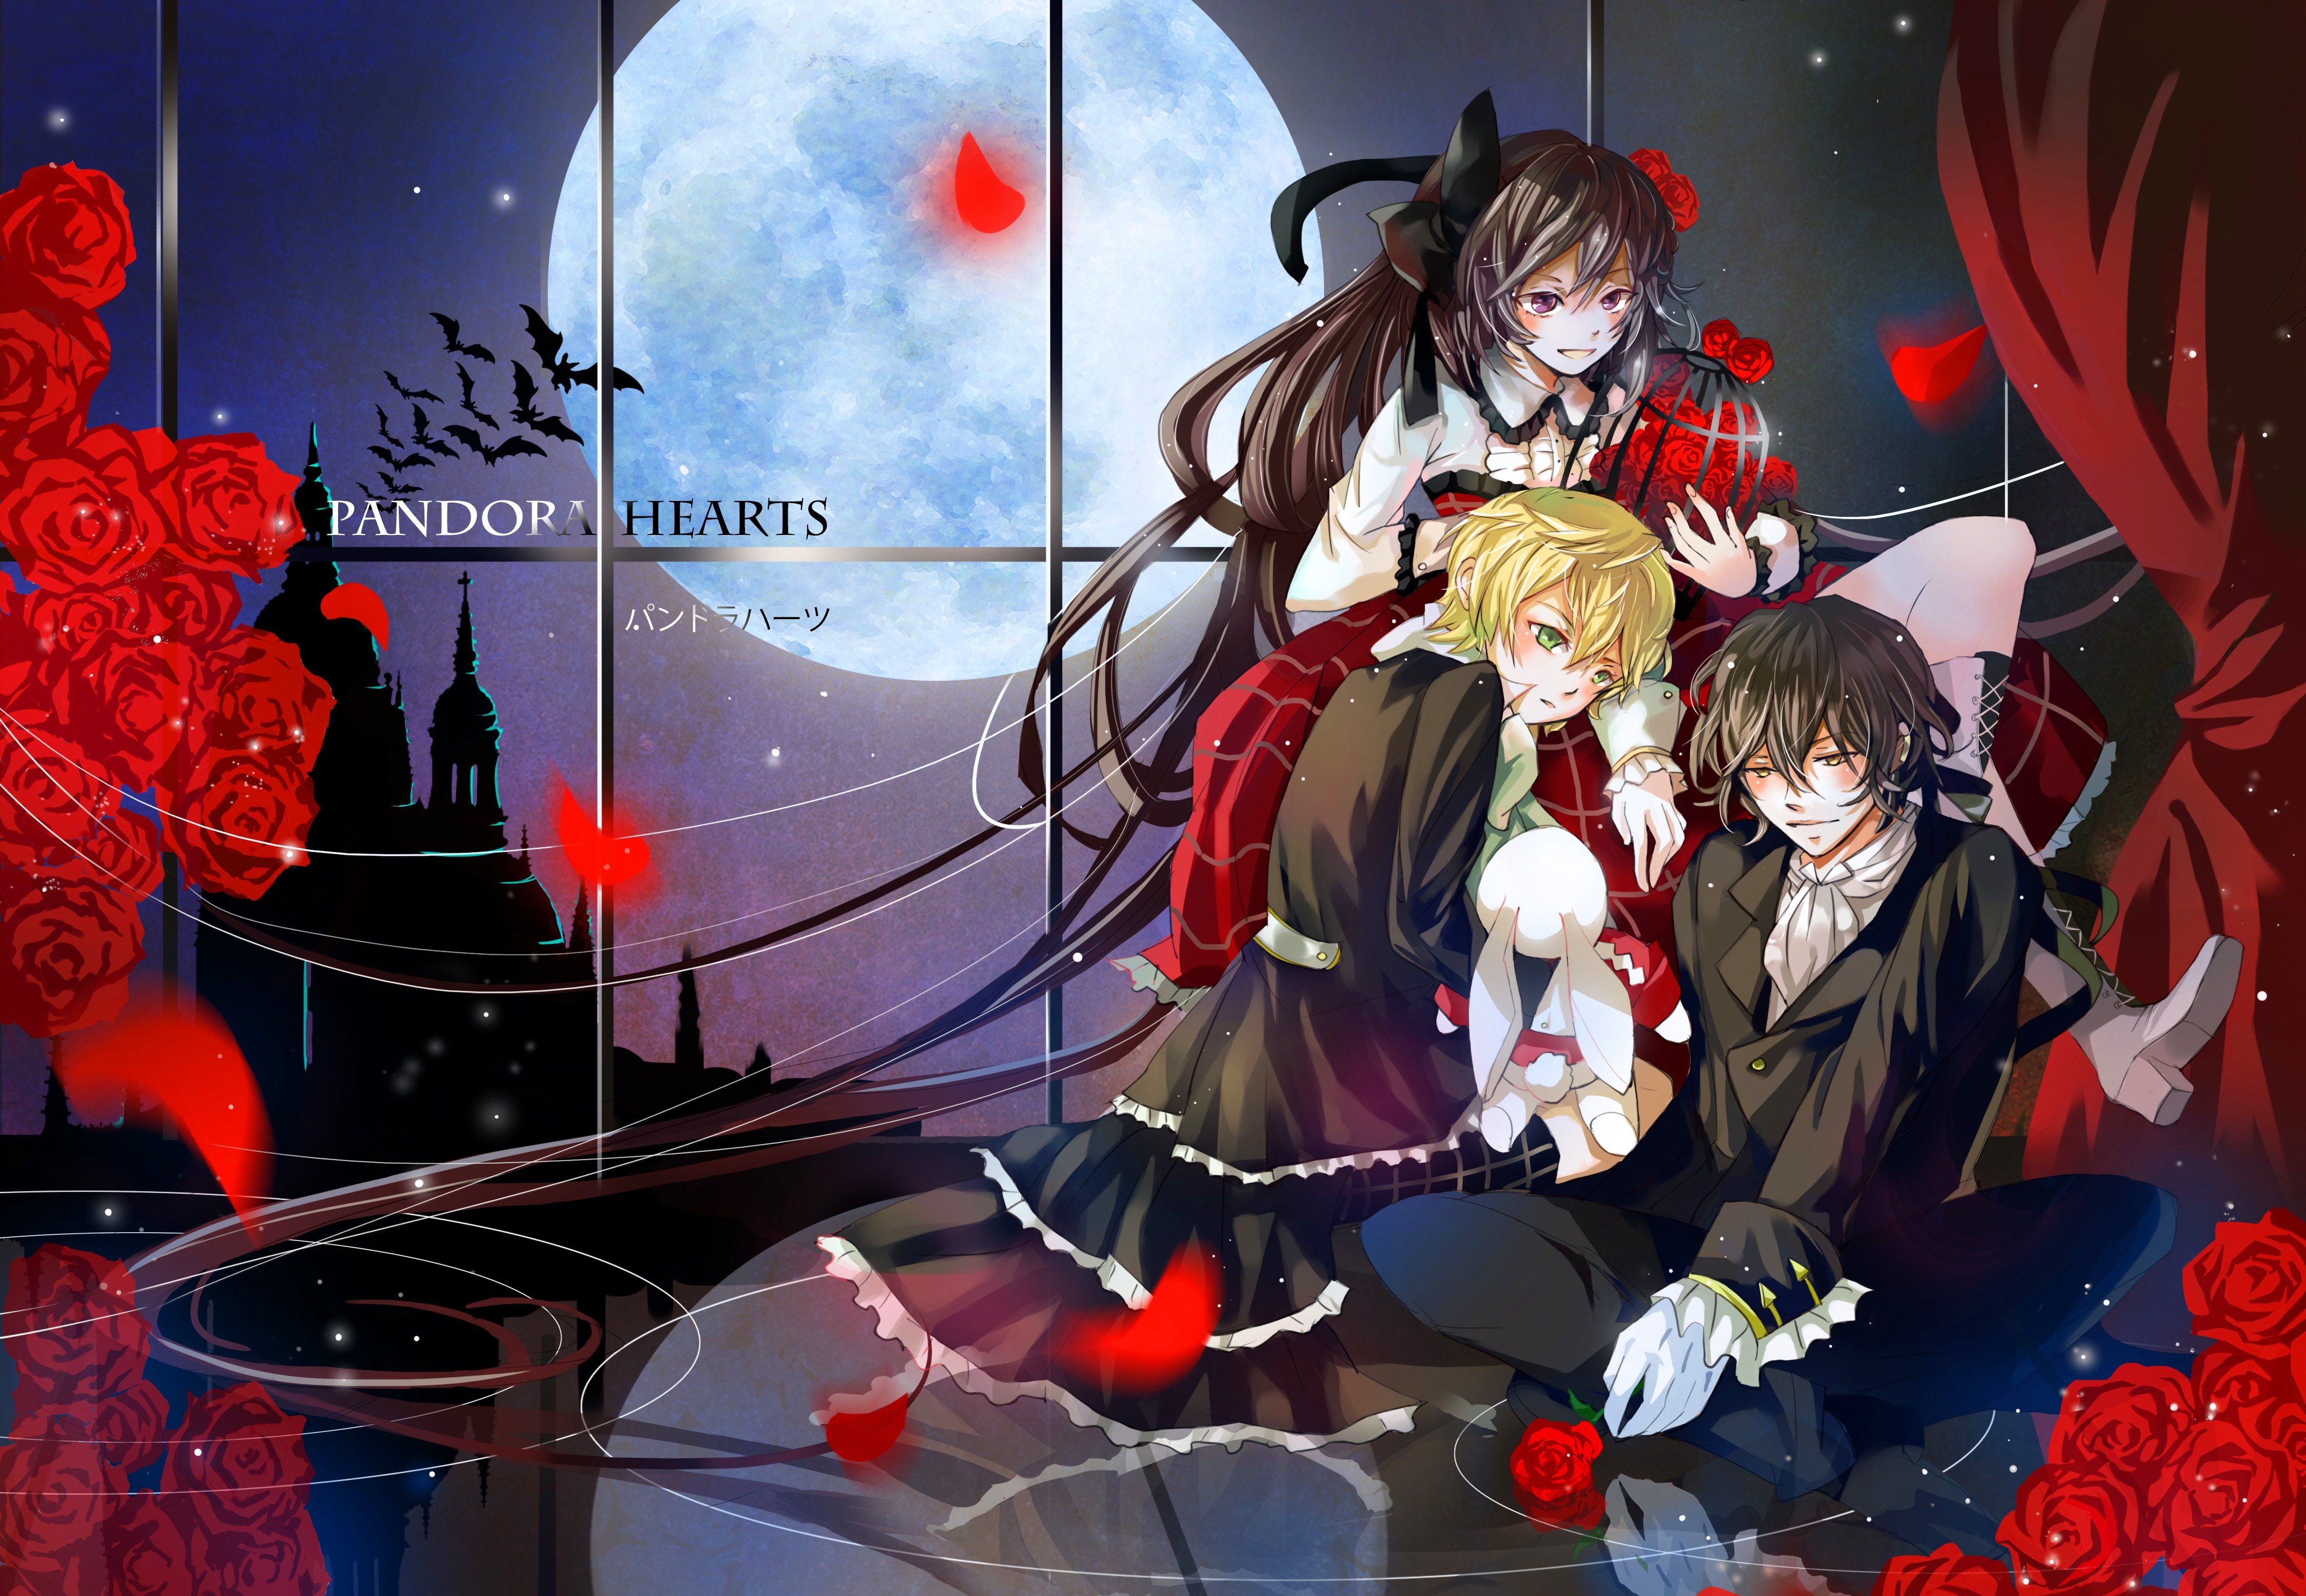 pandora, Hearts Wallpaper HD / Desktop and Mobile Background